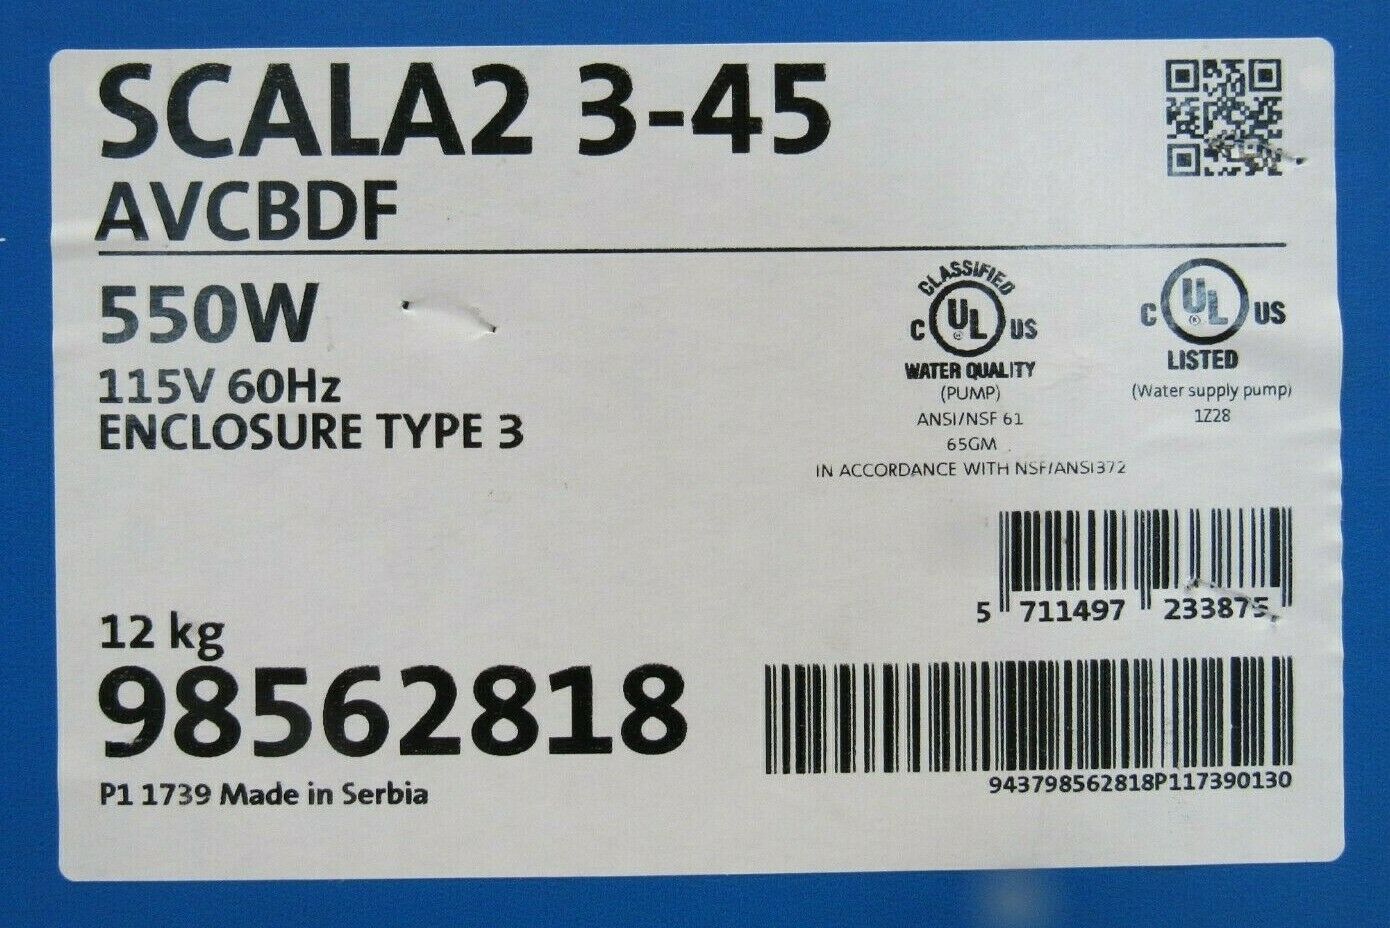 NEW GRUNFOS 98562818 SCALA2 3-45 AVCBDF WATER BOOSTER PUMP 115V – SB .